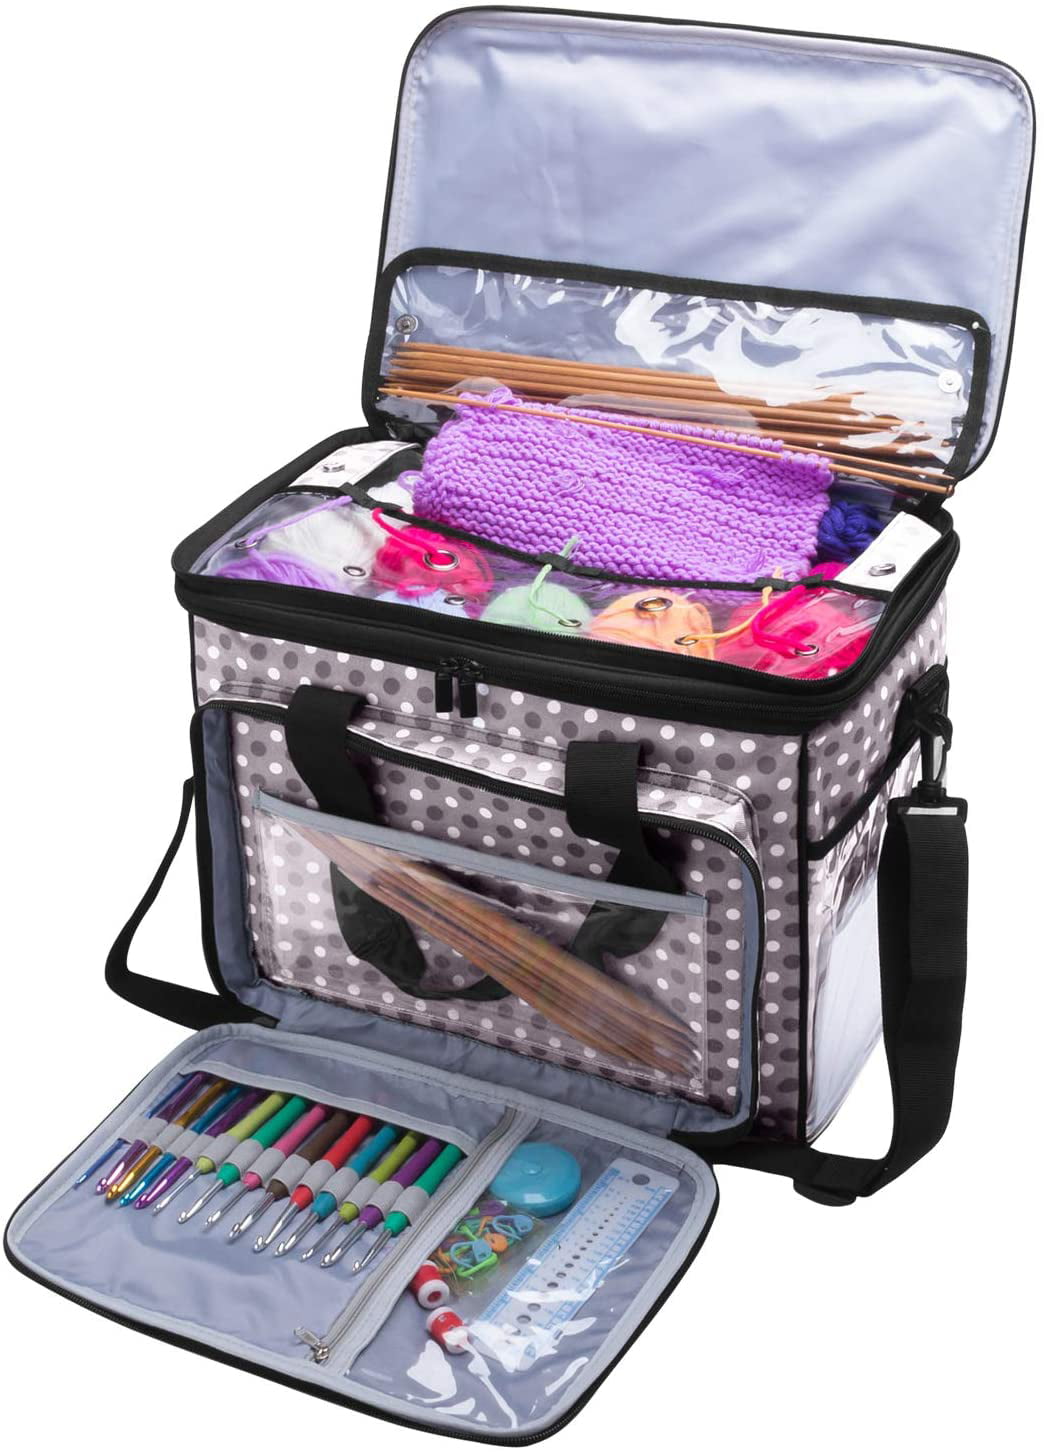  Teamoy Knitting Bag, Yarn Storage Bag Tote, Travel